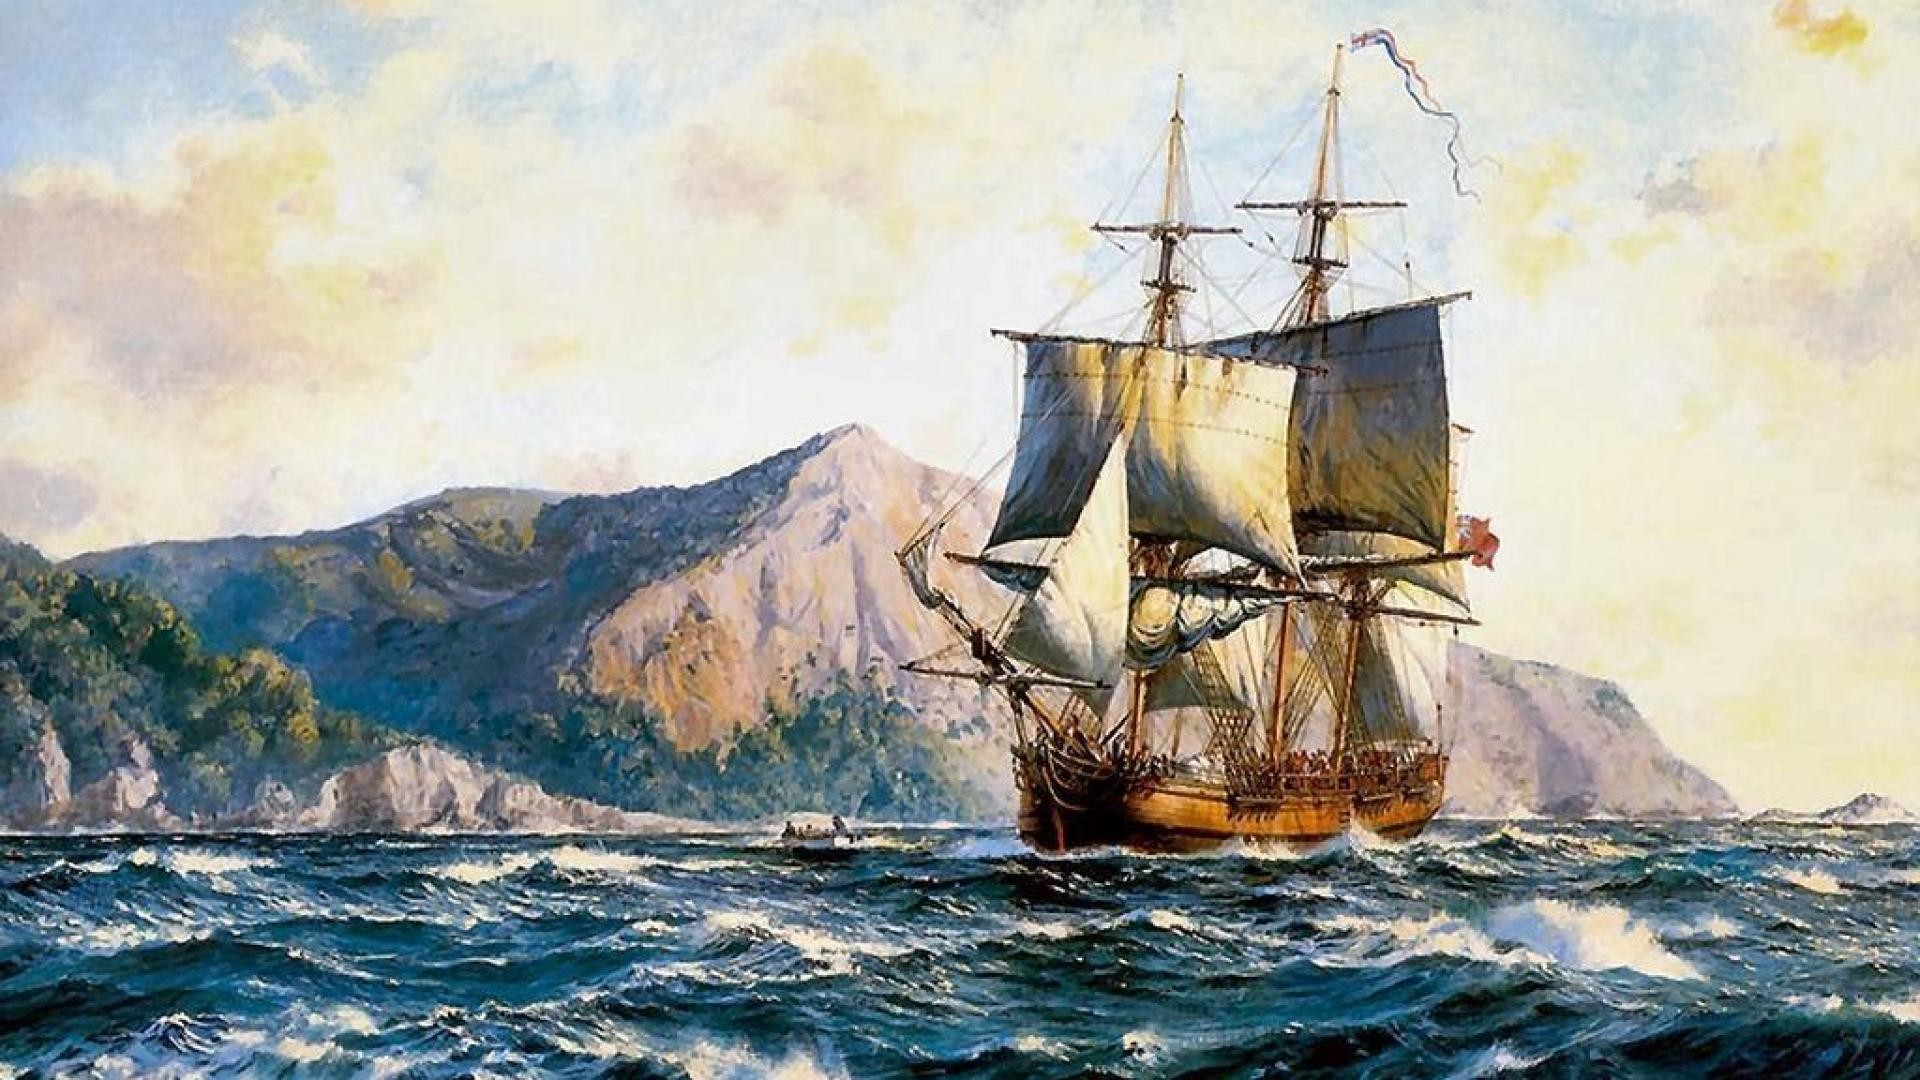 1920x1080 wallpaper: tall ship, rough sea, island, painting, sailing .